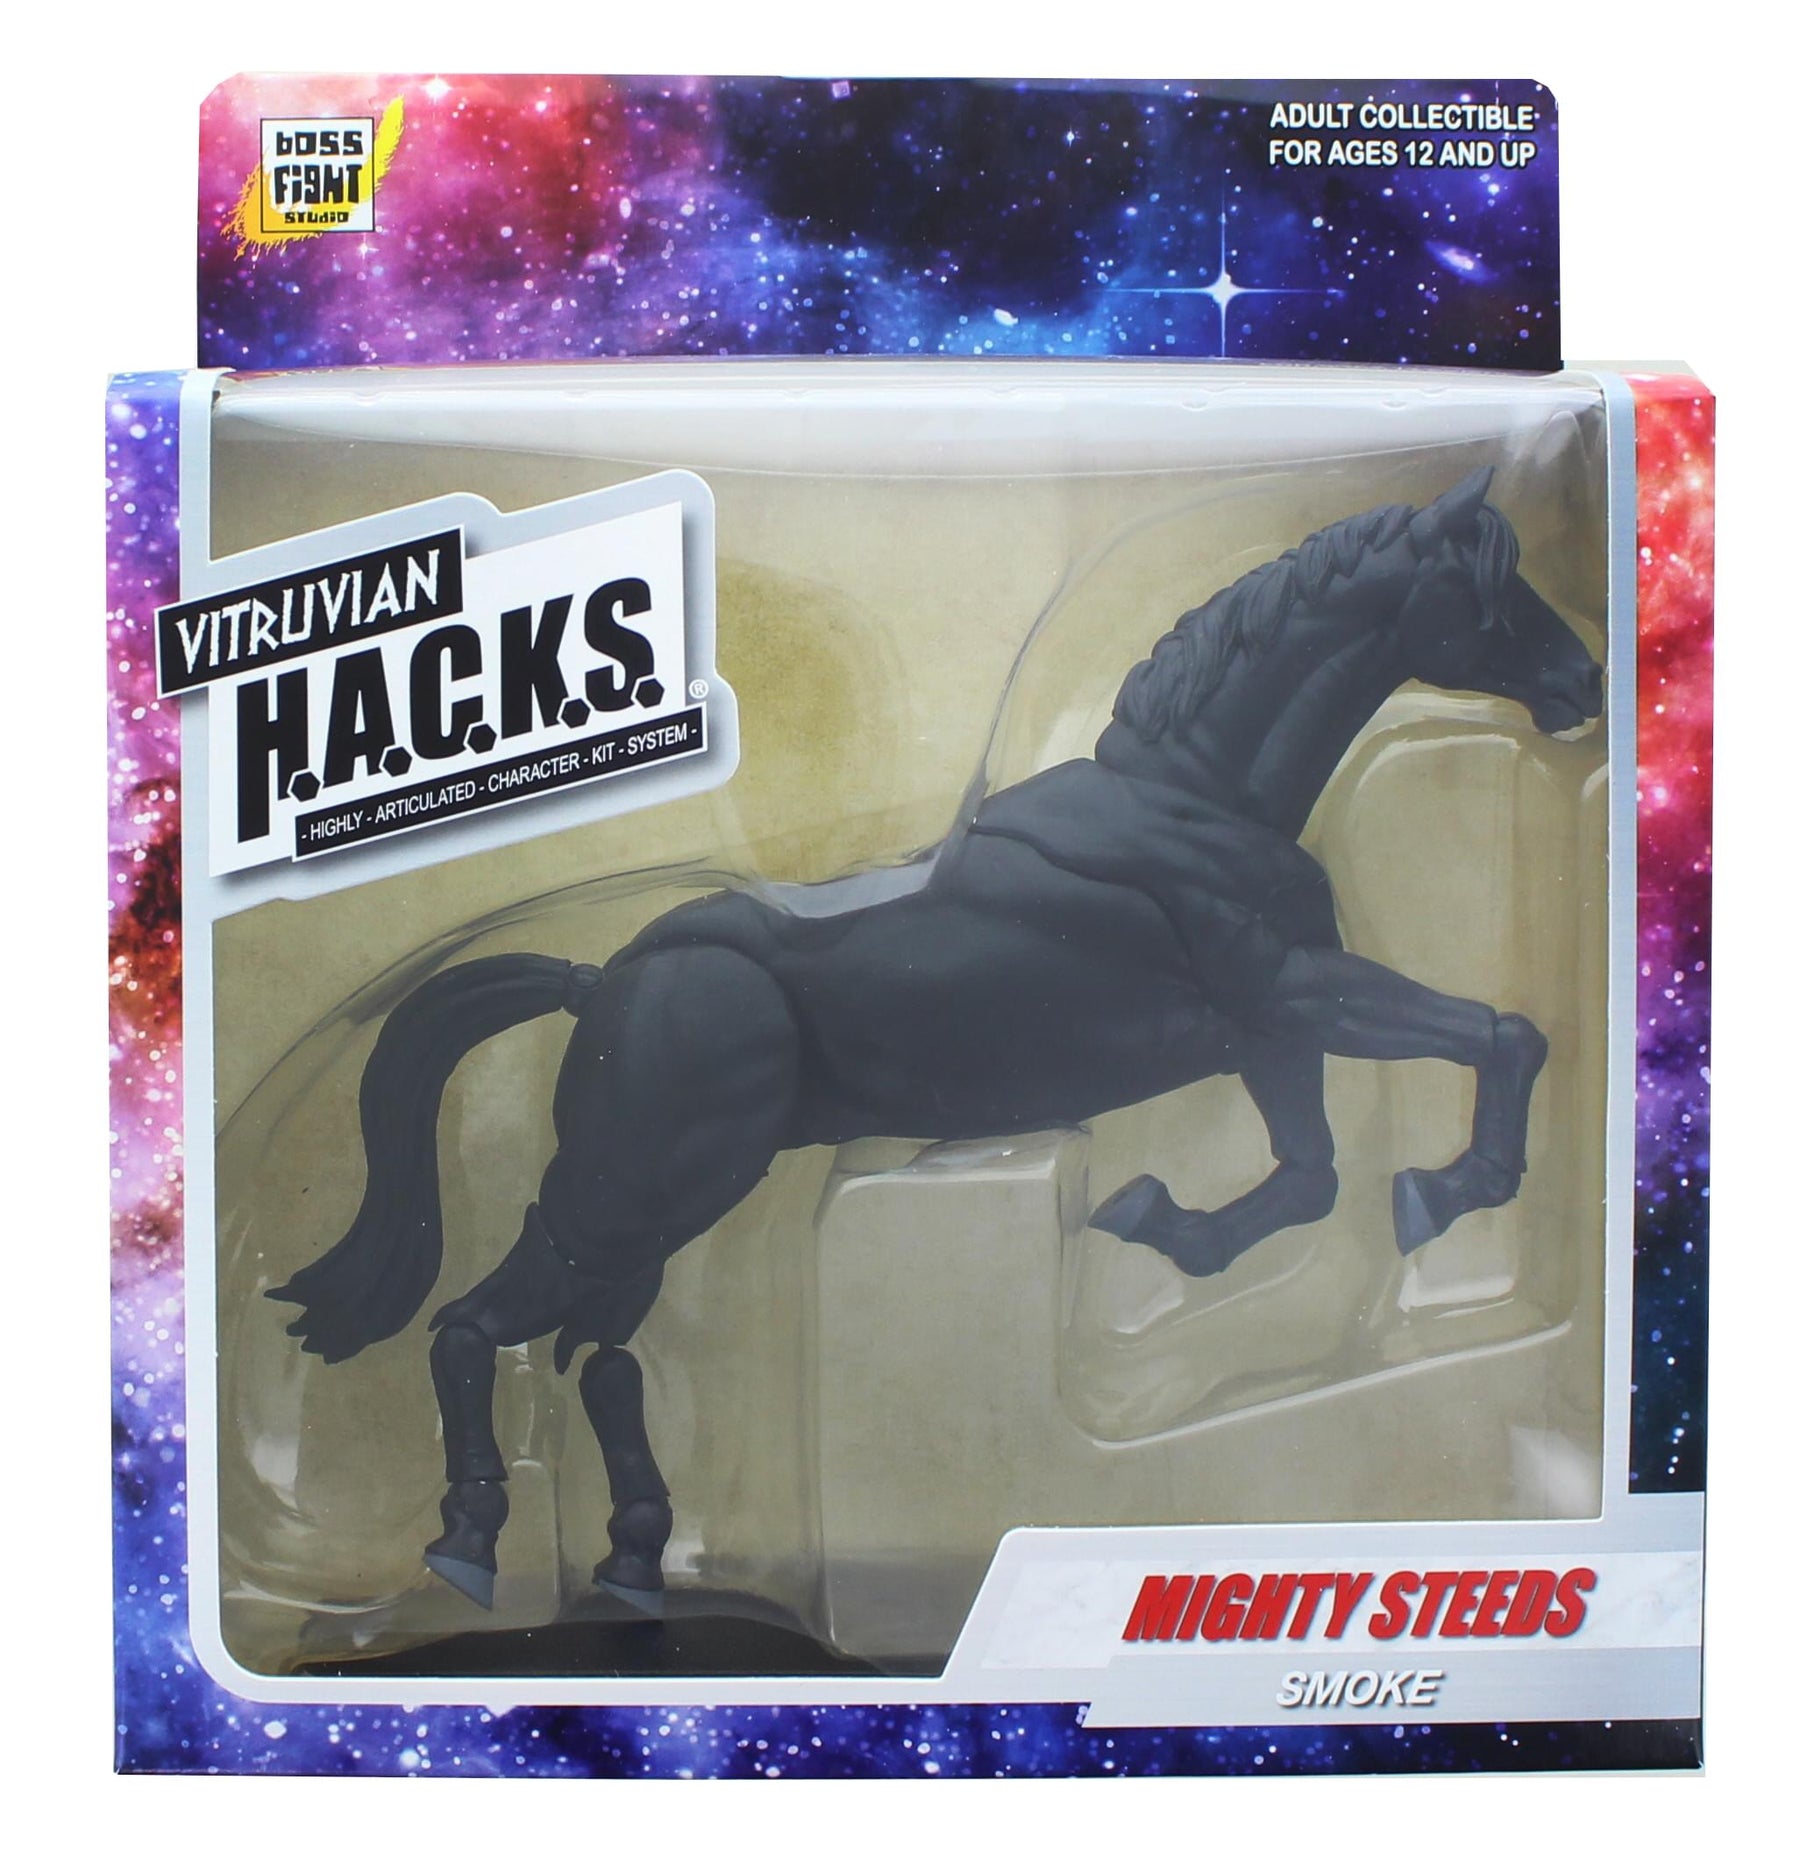 Vitruvian H.A.C.K.S. Mighty Steeds Action Figure Mount | Smoke (Black Horse)